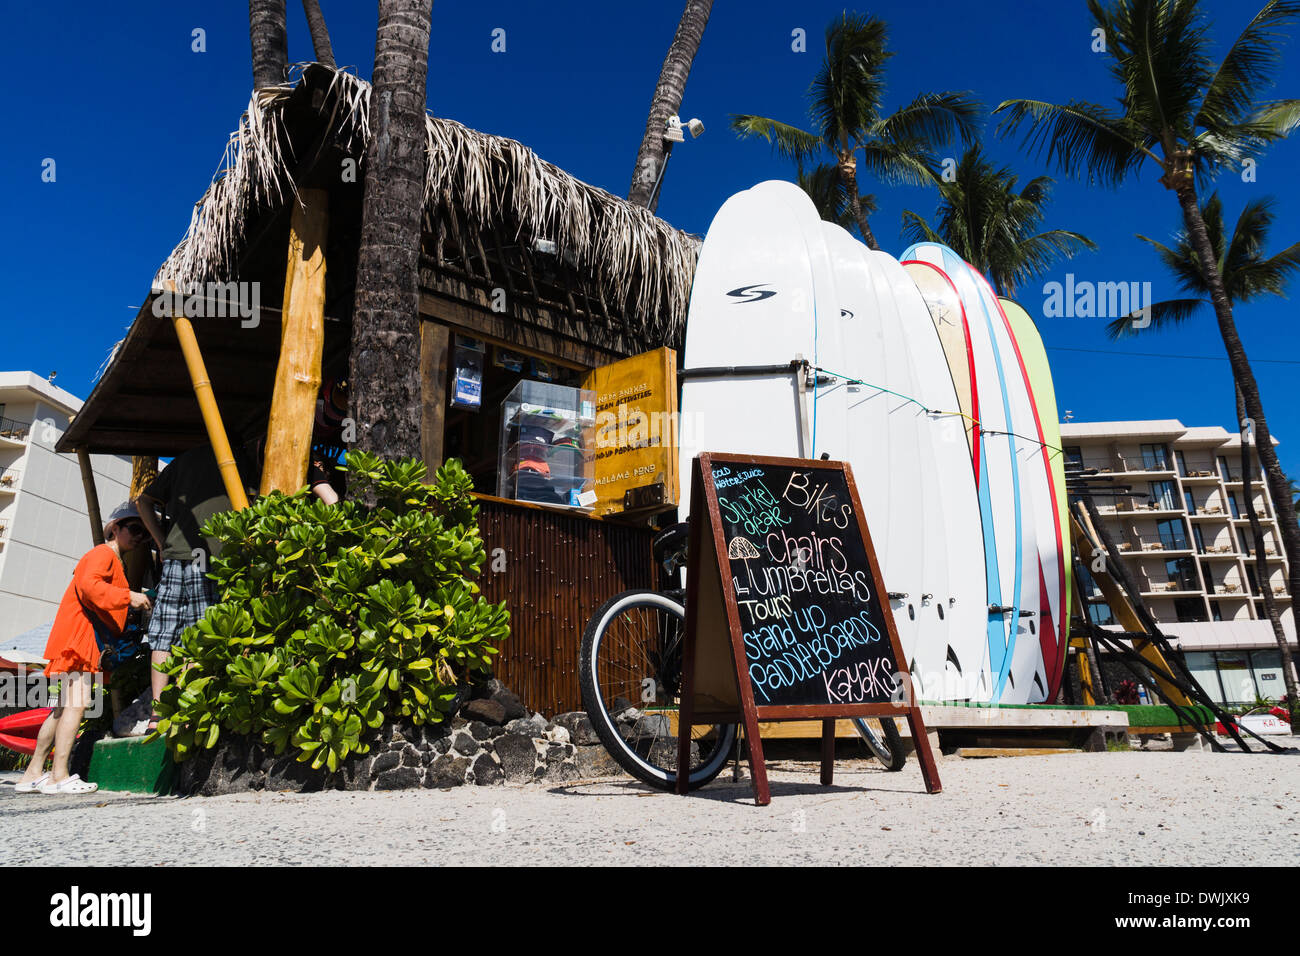 Kona Boys beach shack. Rental of kayaks, stand-up paddleboards, snorkel gear, bicycles. Kailua, Big Island, Hawaii, USA. Stock Photo